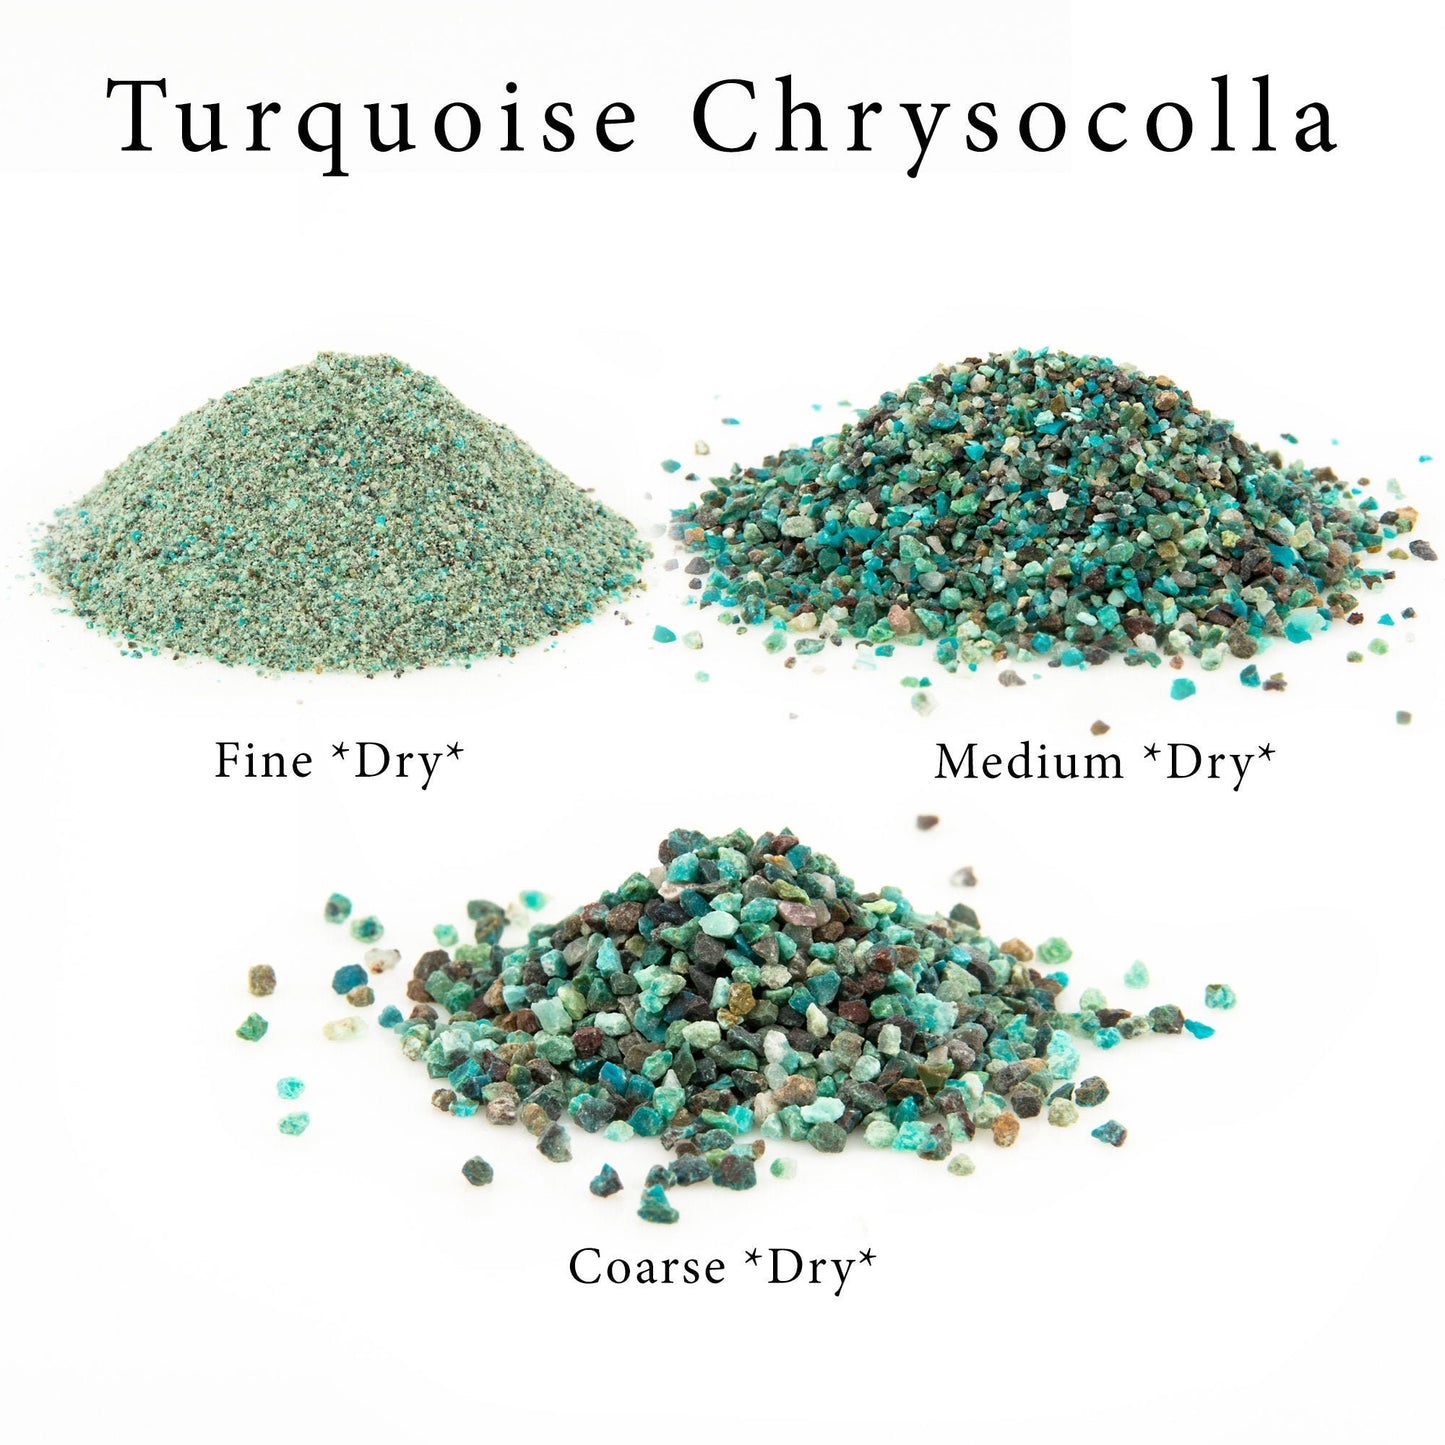 Turquoise Chrysocolla